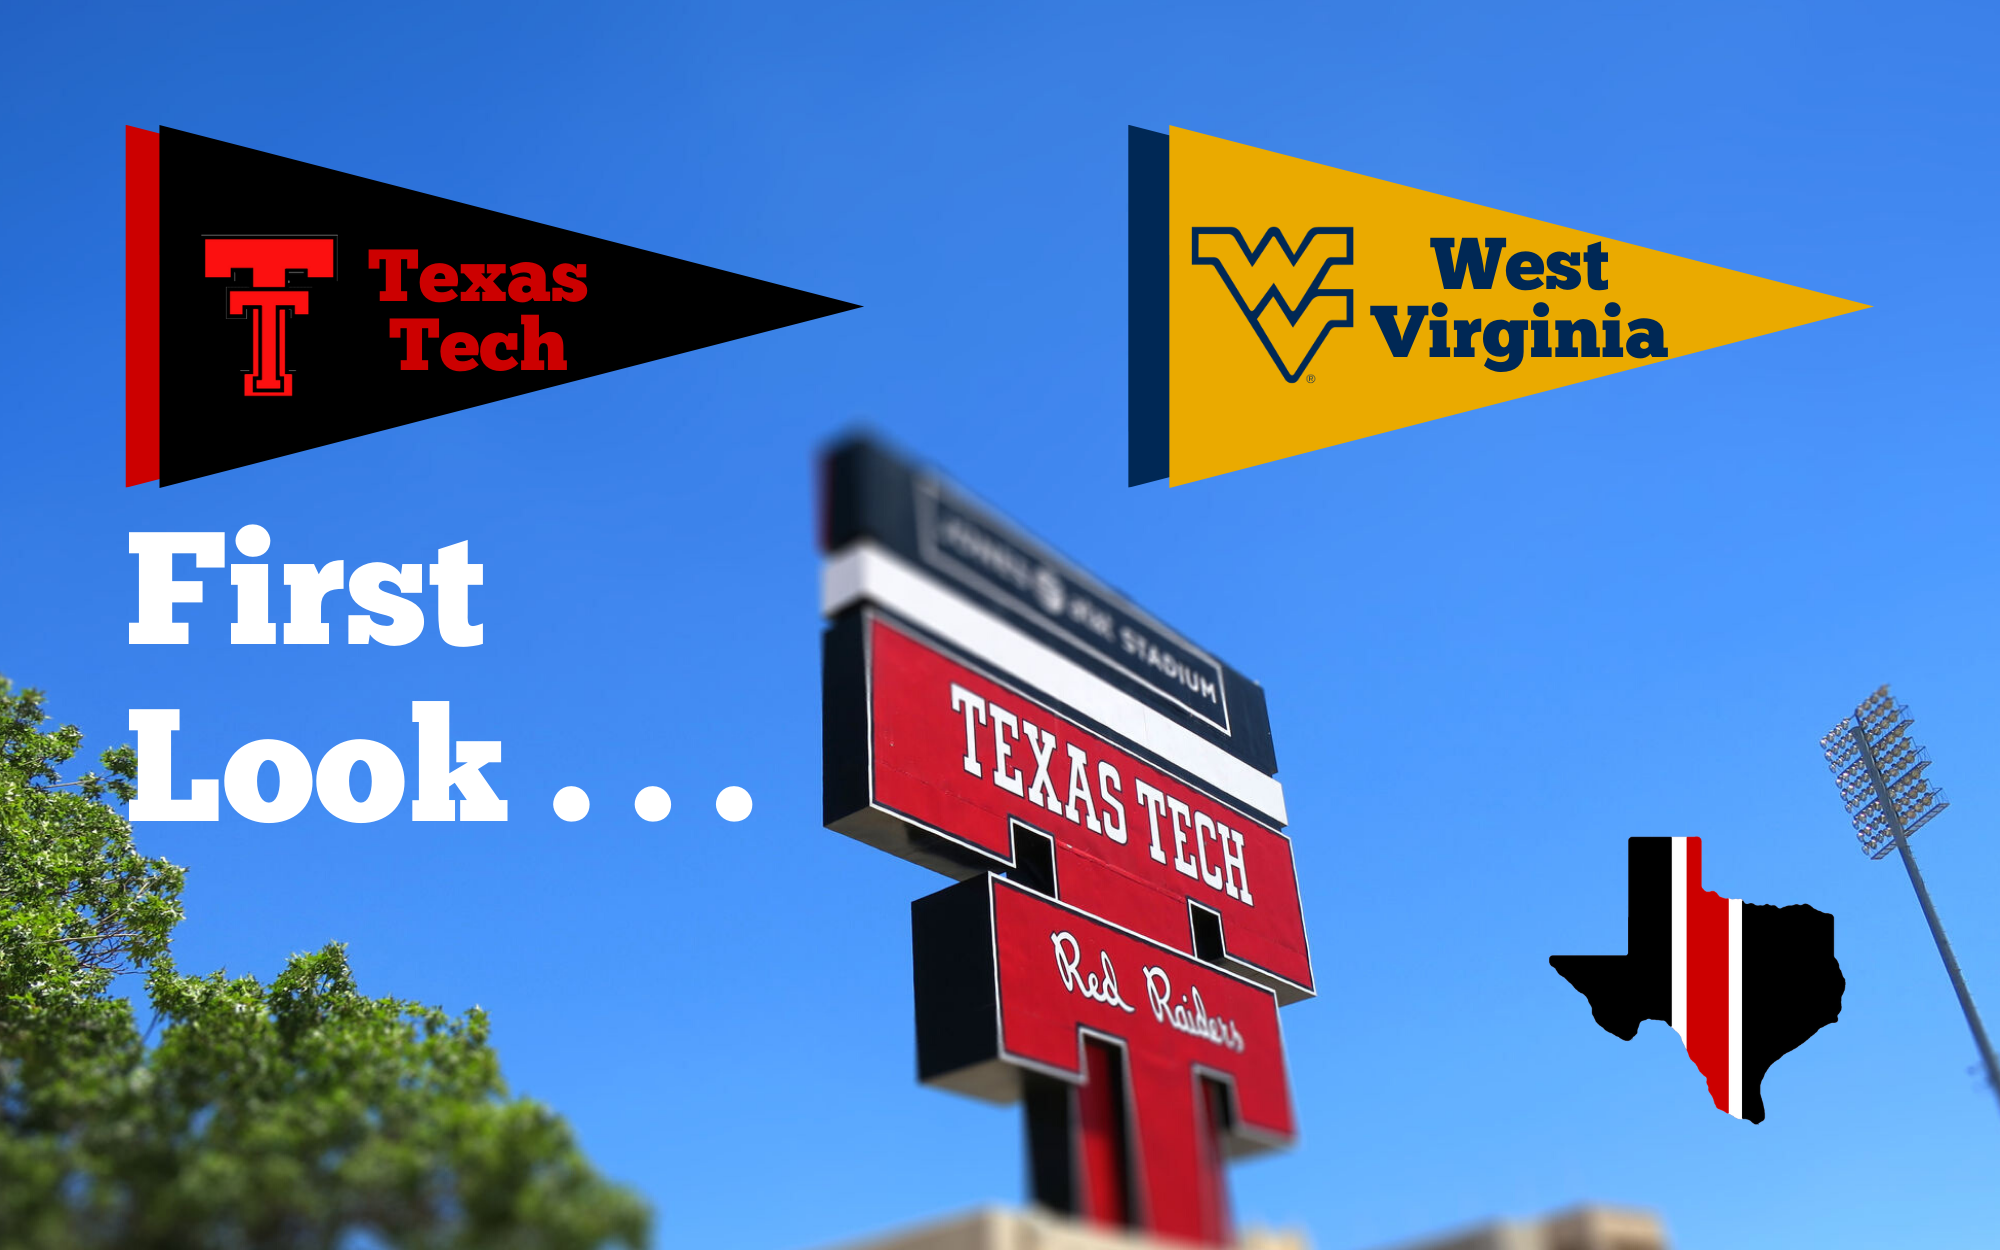 First Look . . . Texas Tech Red Raiders vs. West Virginia Mountaineers